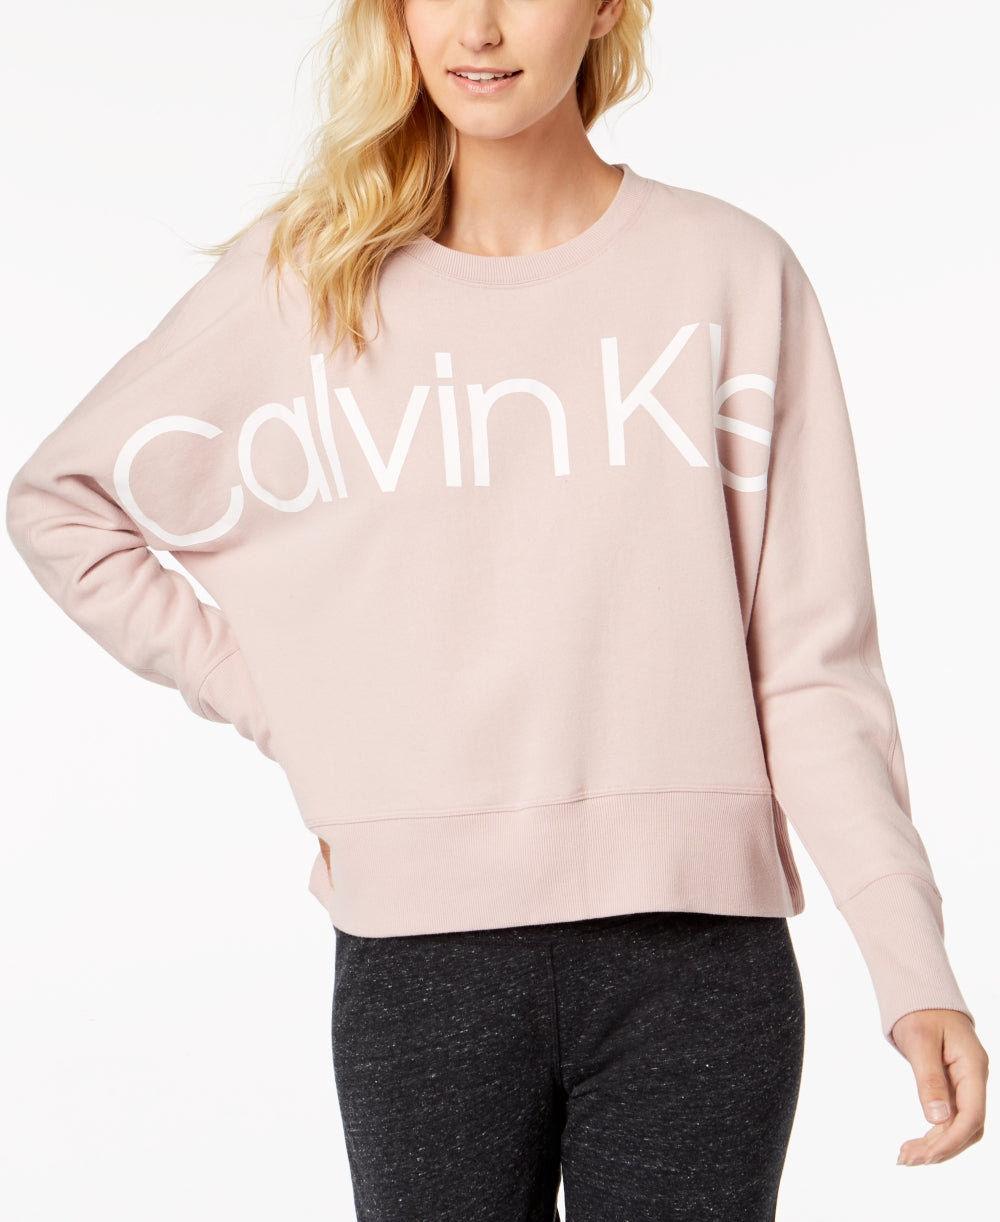 Calvin Klein Womens Logo Relaxed Sweatshirt